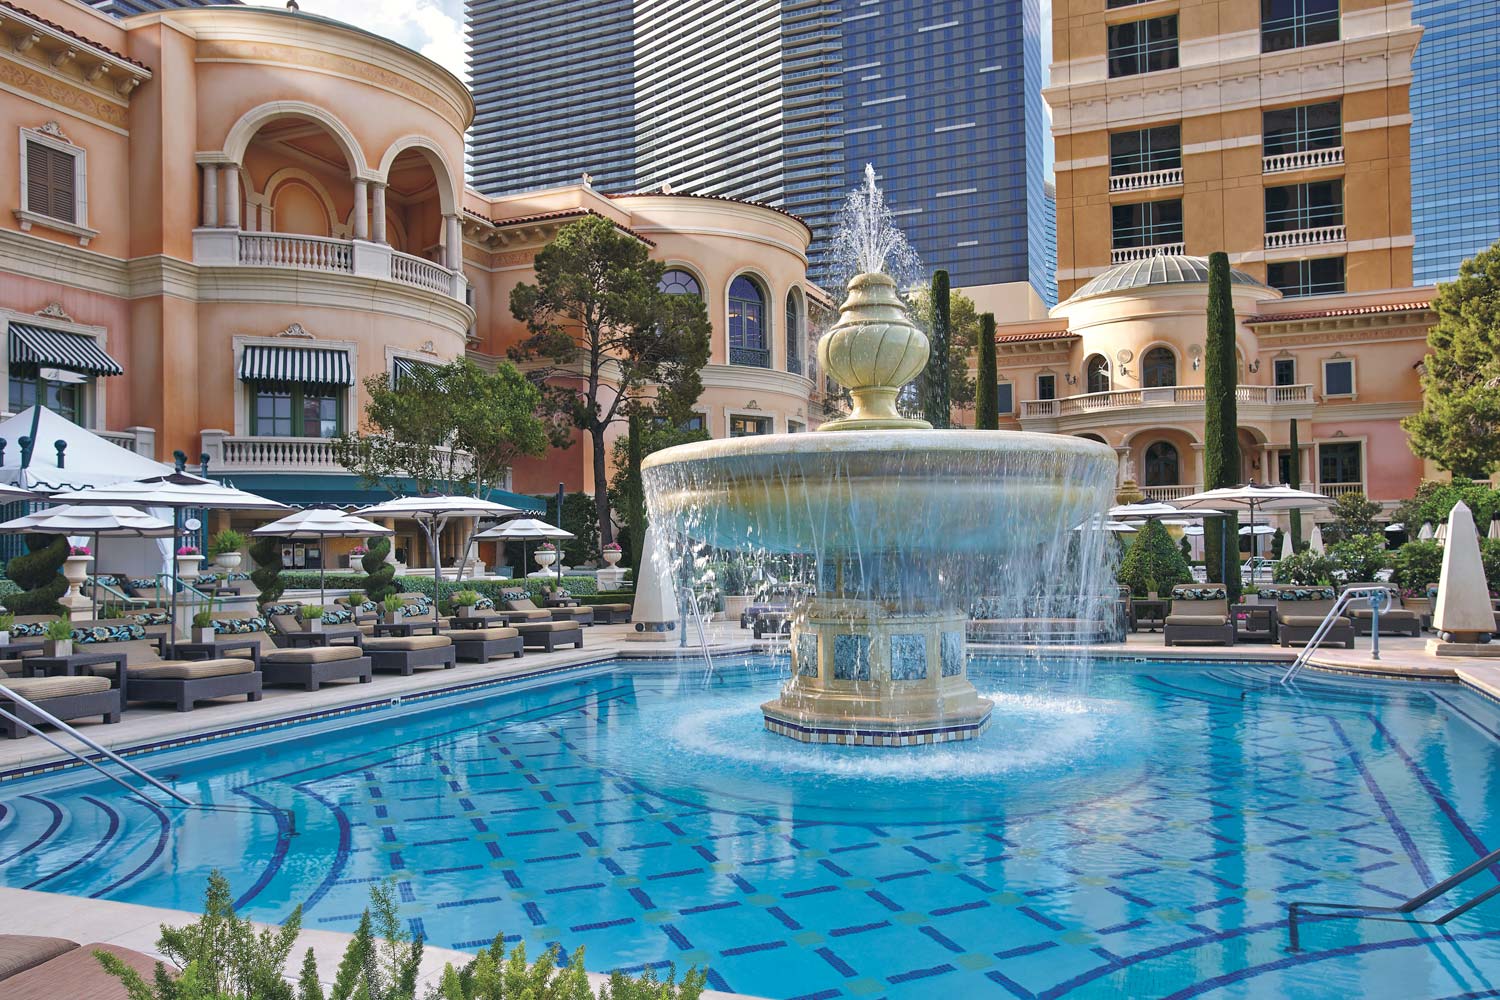 Conservatory & Botanical Gardens - Bellagio Las Vegas - MGM Resorts